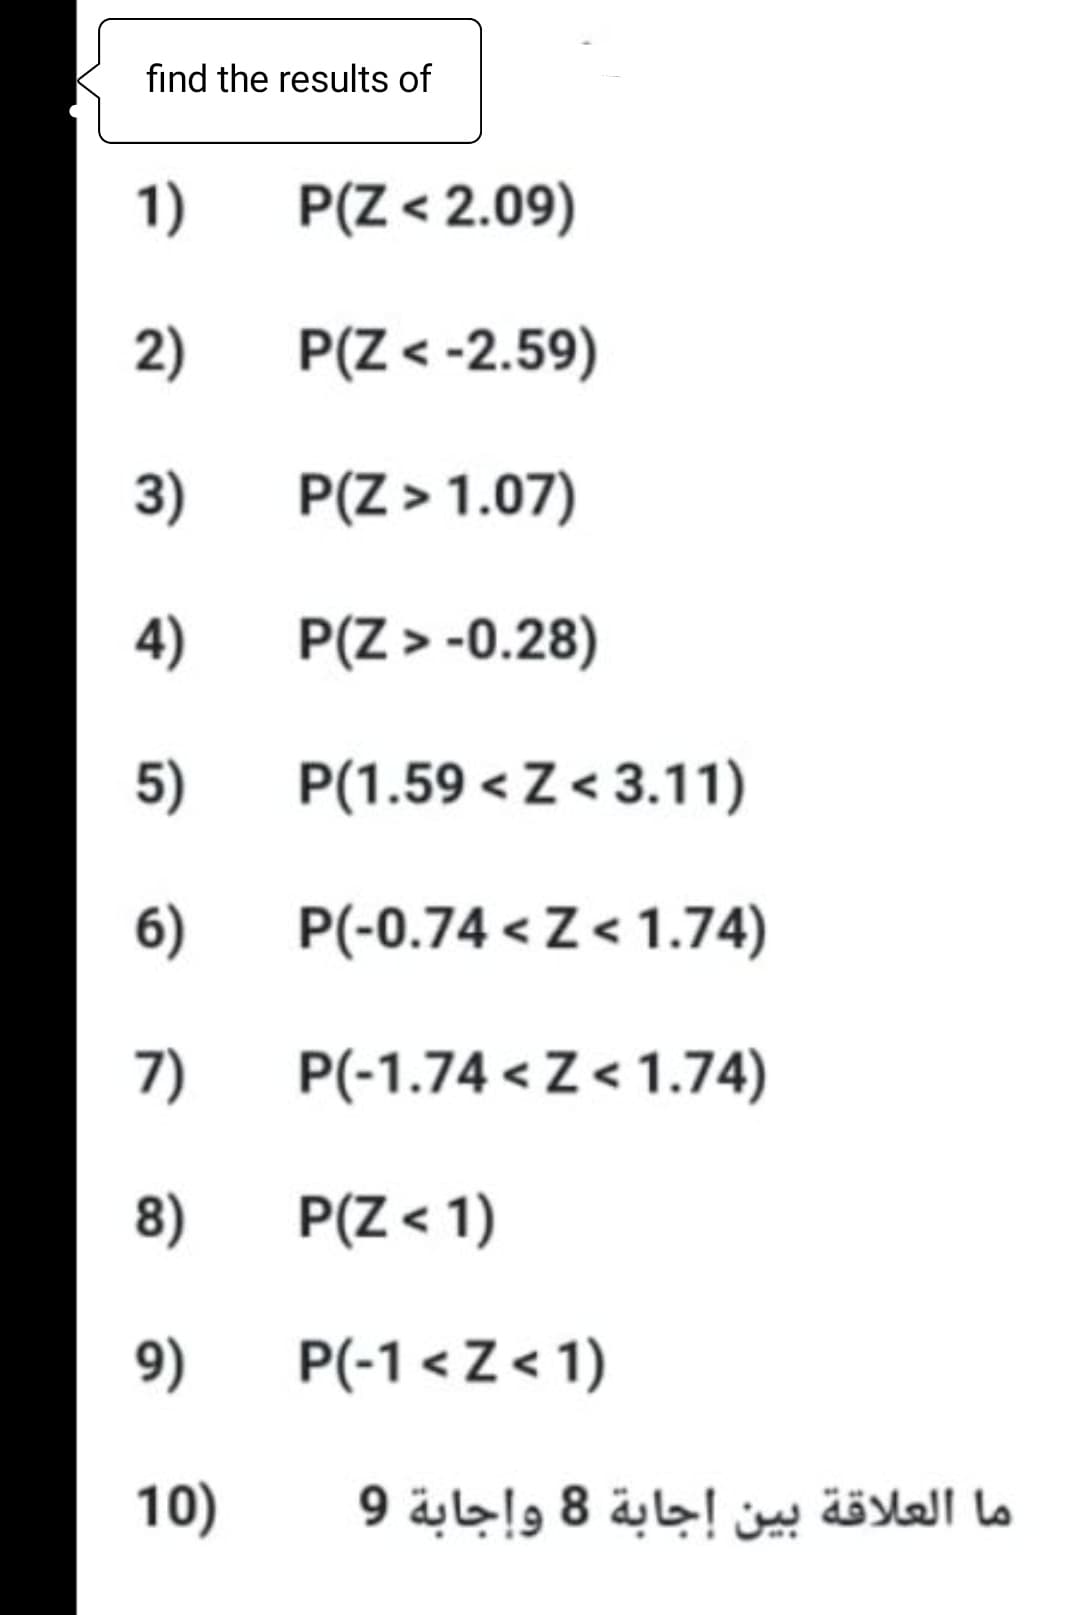 find the results of
1)
P(Z < 2.09)
2)
P(Z < -2.59)
3)
P(Z > 1.07)
4)
P(Z > -0.28)
5)
P(1.59 < Z < 3.11)
6)
P(-0.74 < Z < 1.74)
7)
P(-1.74 < Z< 1.74)
8)
P(Z < 1)
9)
P(-1 < Z < 1)
10)
ما العلاقة بين إجابة 8 وإجابة 9
